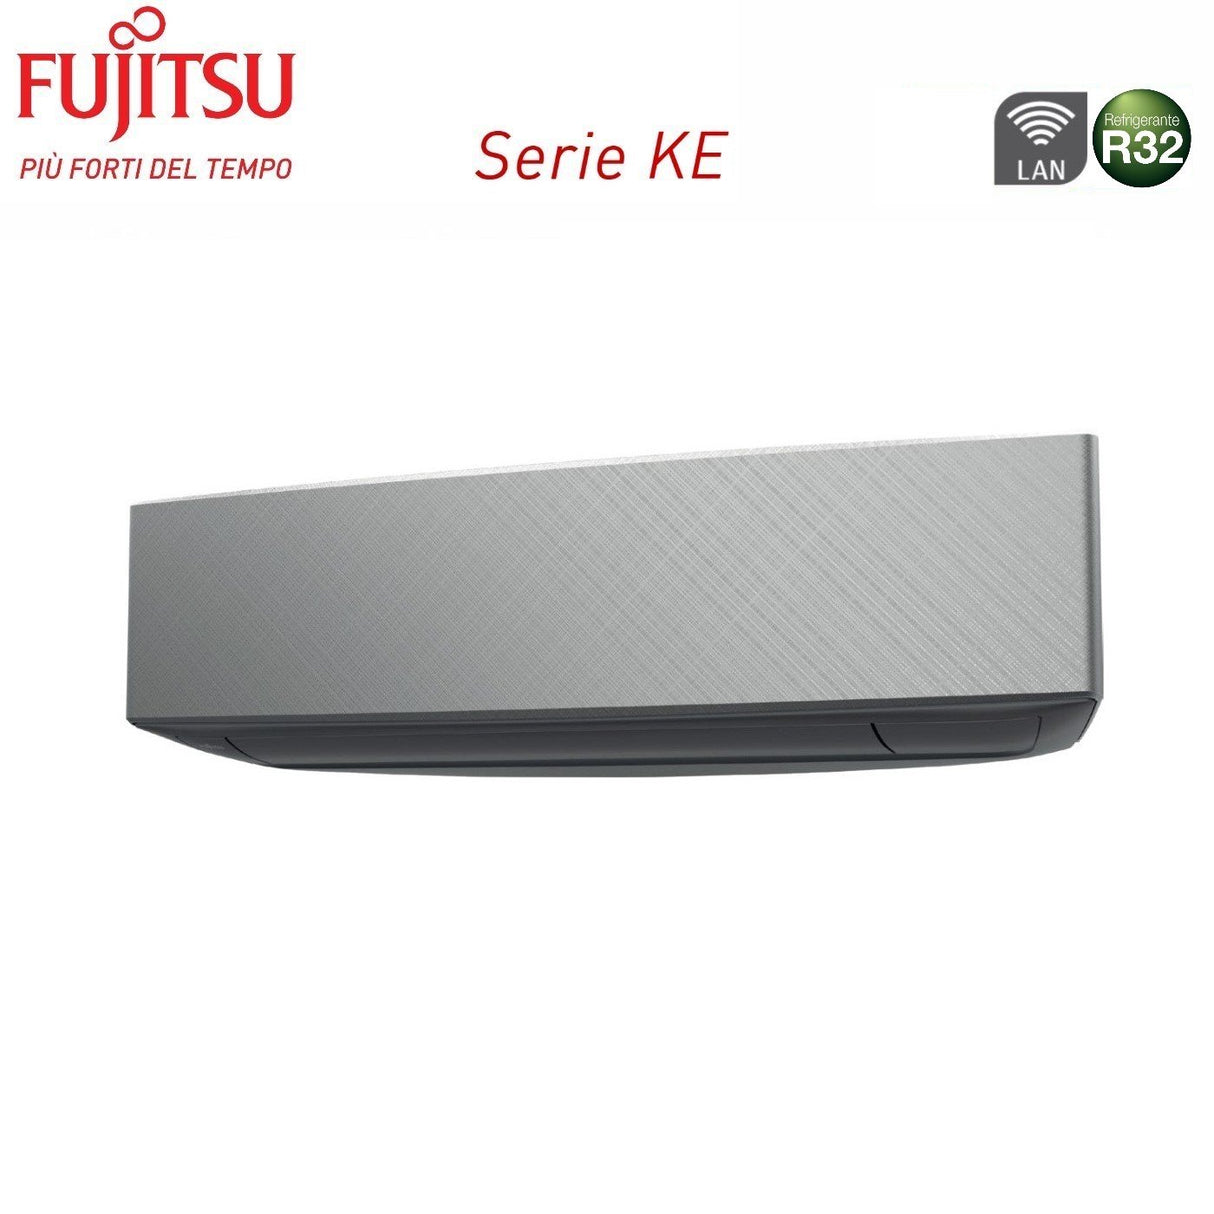 immagine-2-fujitsu-unita-interna-a-parete-fujitsu-serie-ke-silver-9000-btu-asyg09ketf-b-r-32-wi-fi-integrato-colore-argento-ean-4974437600118